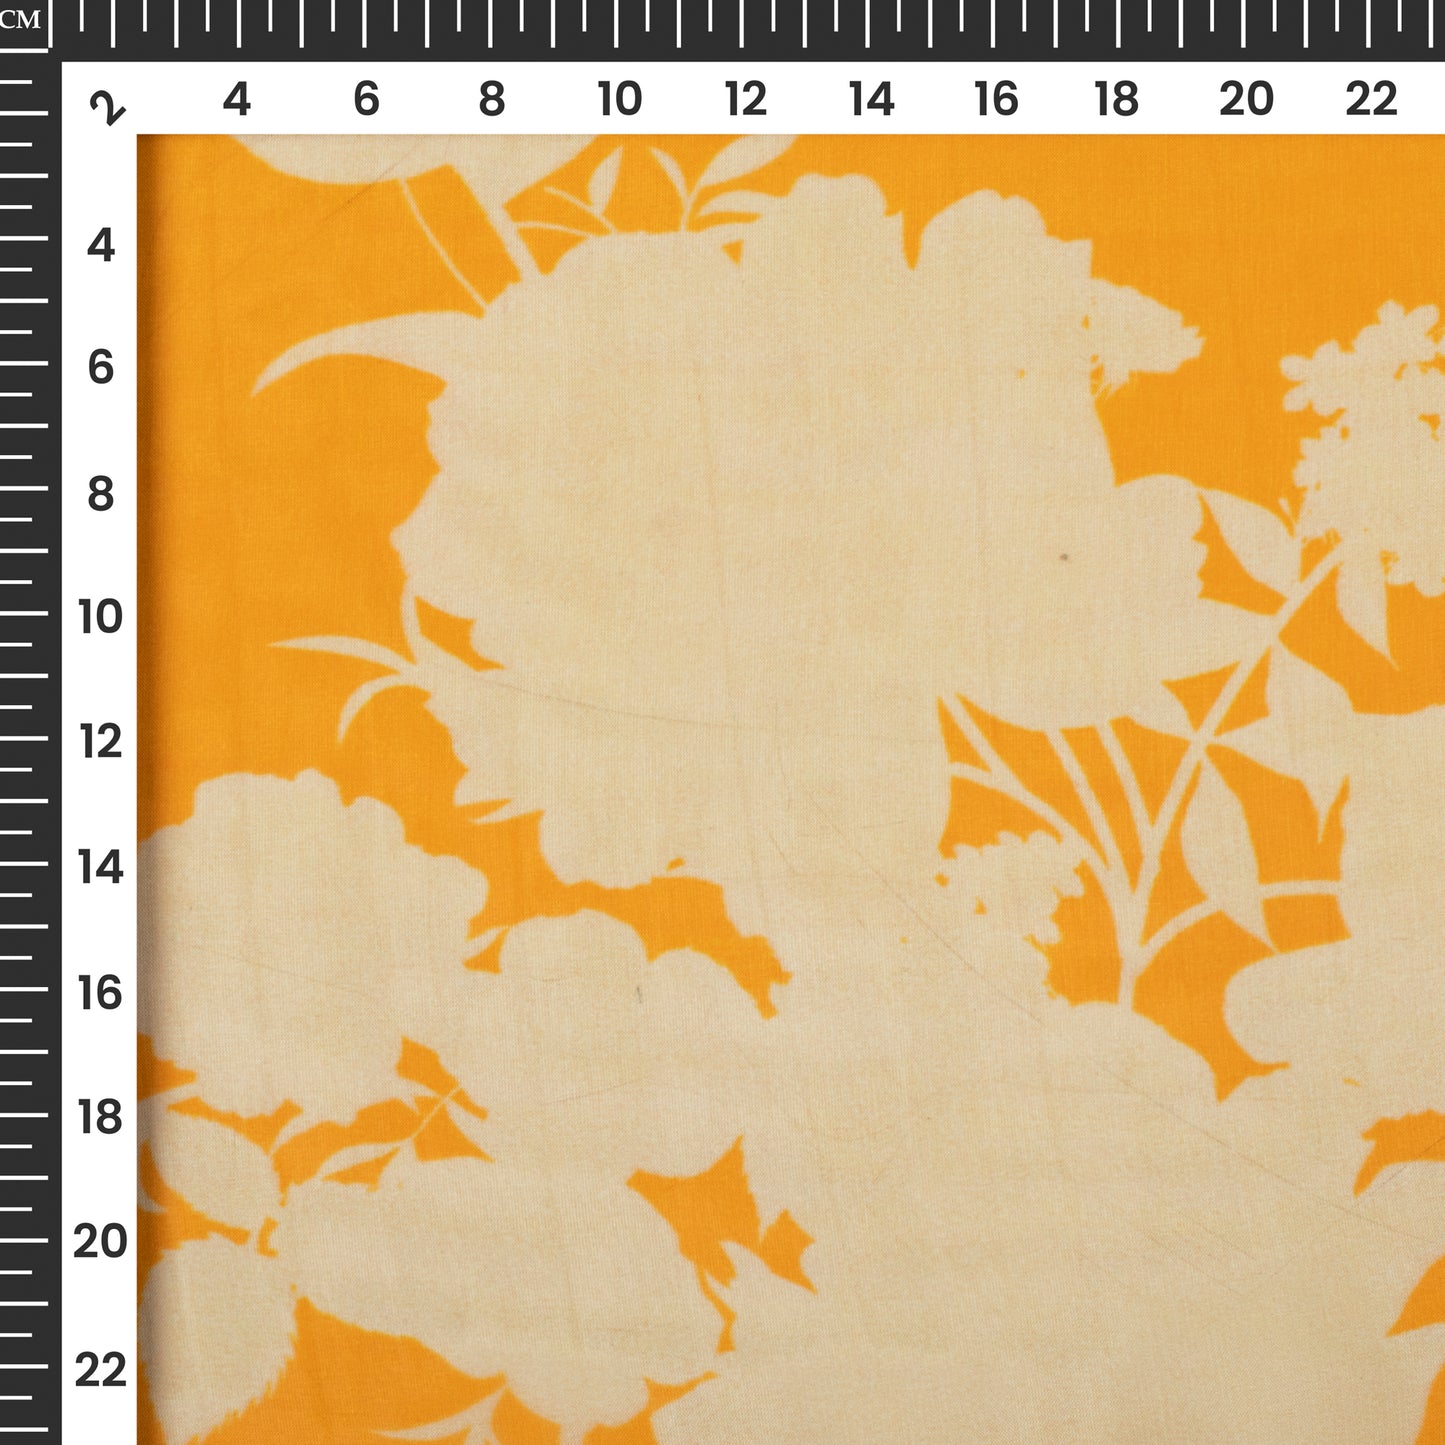 Charming Floral Digital Print Pure Organza Fabric